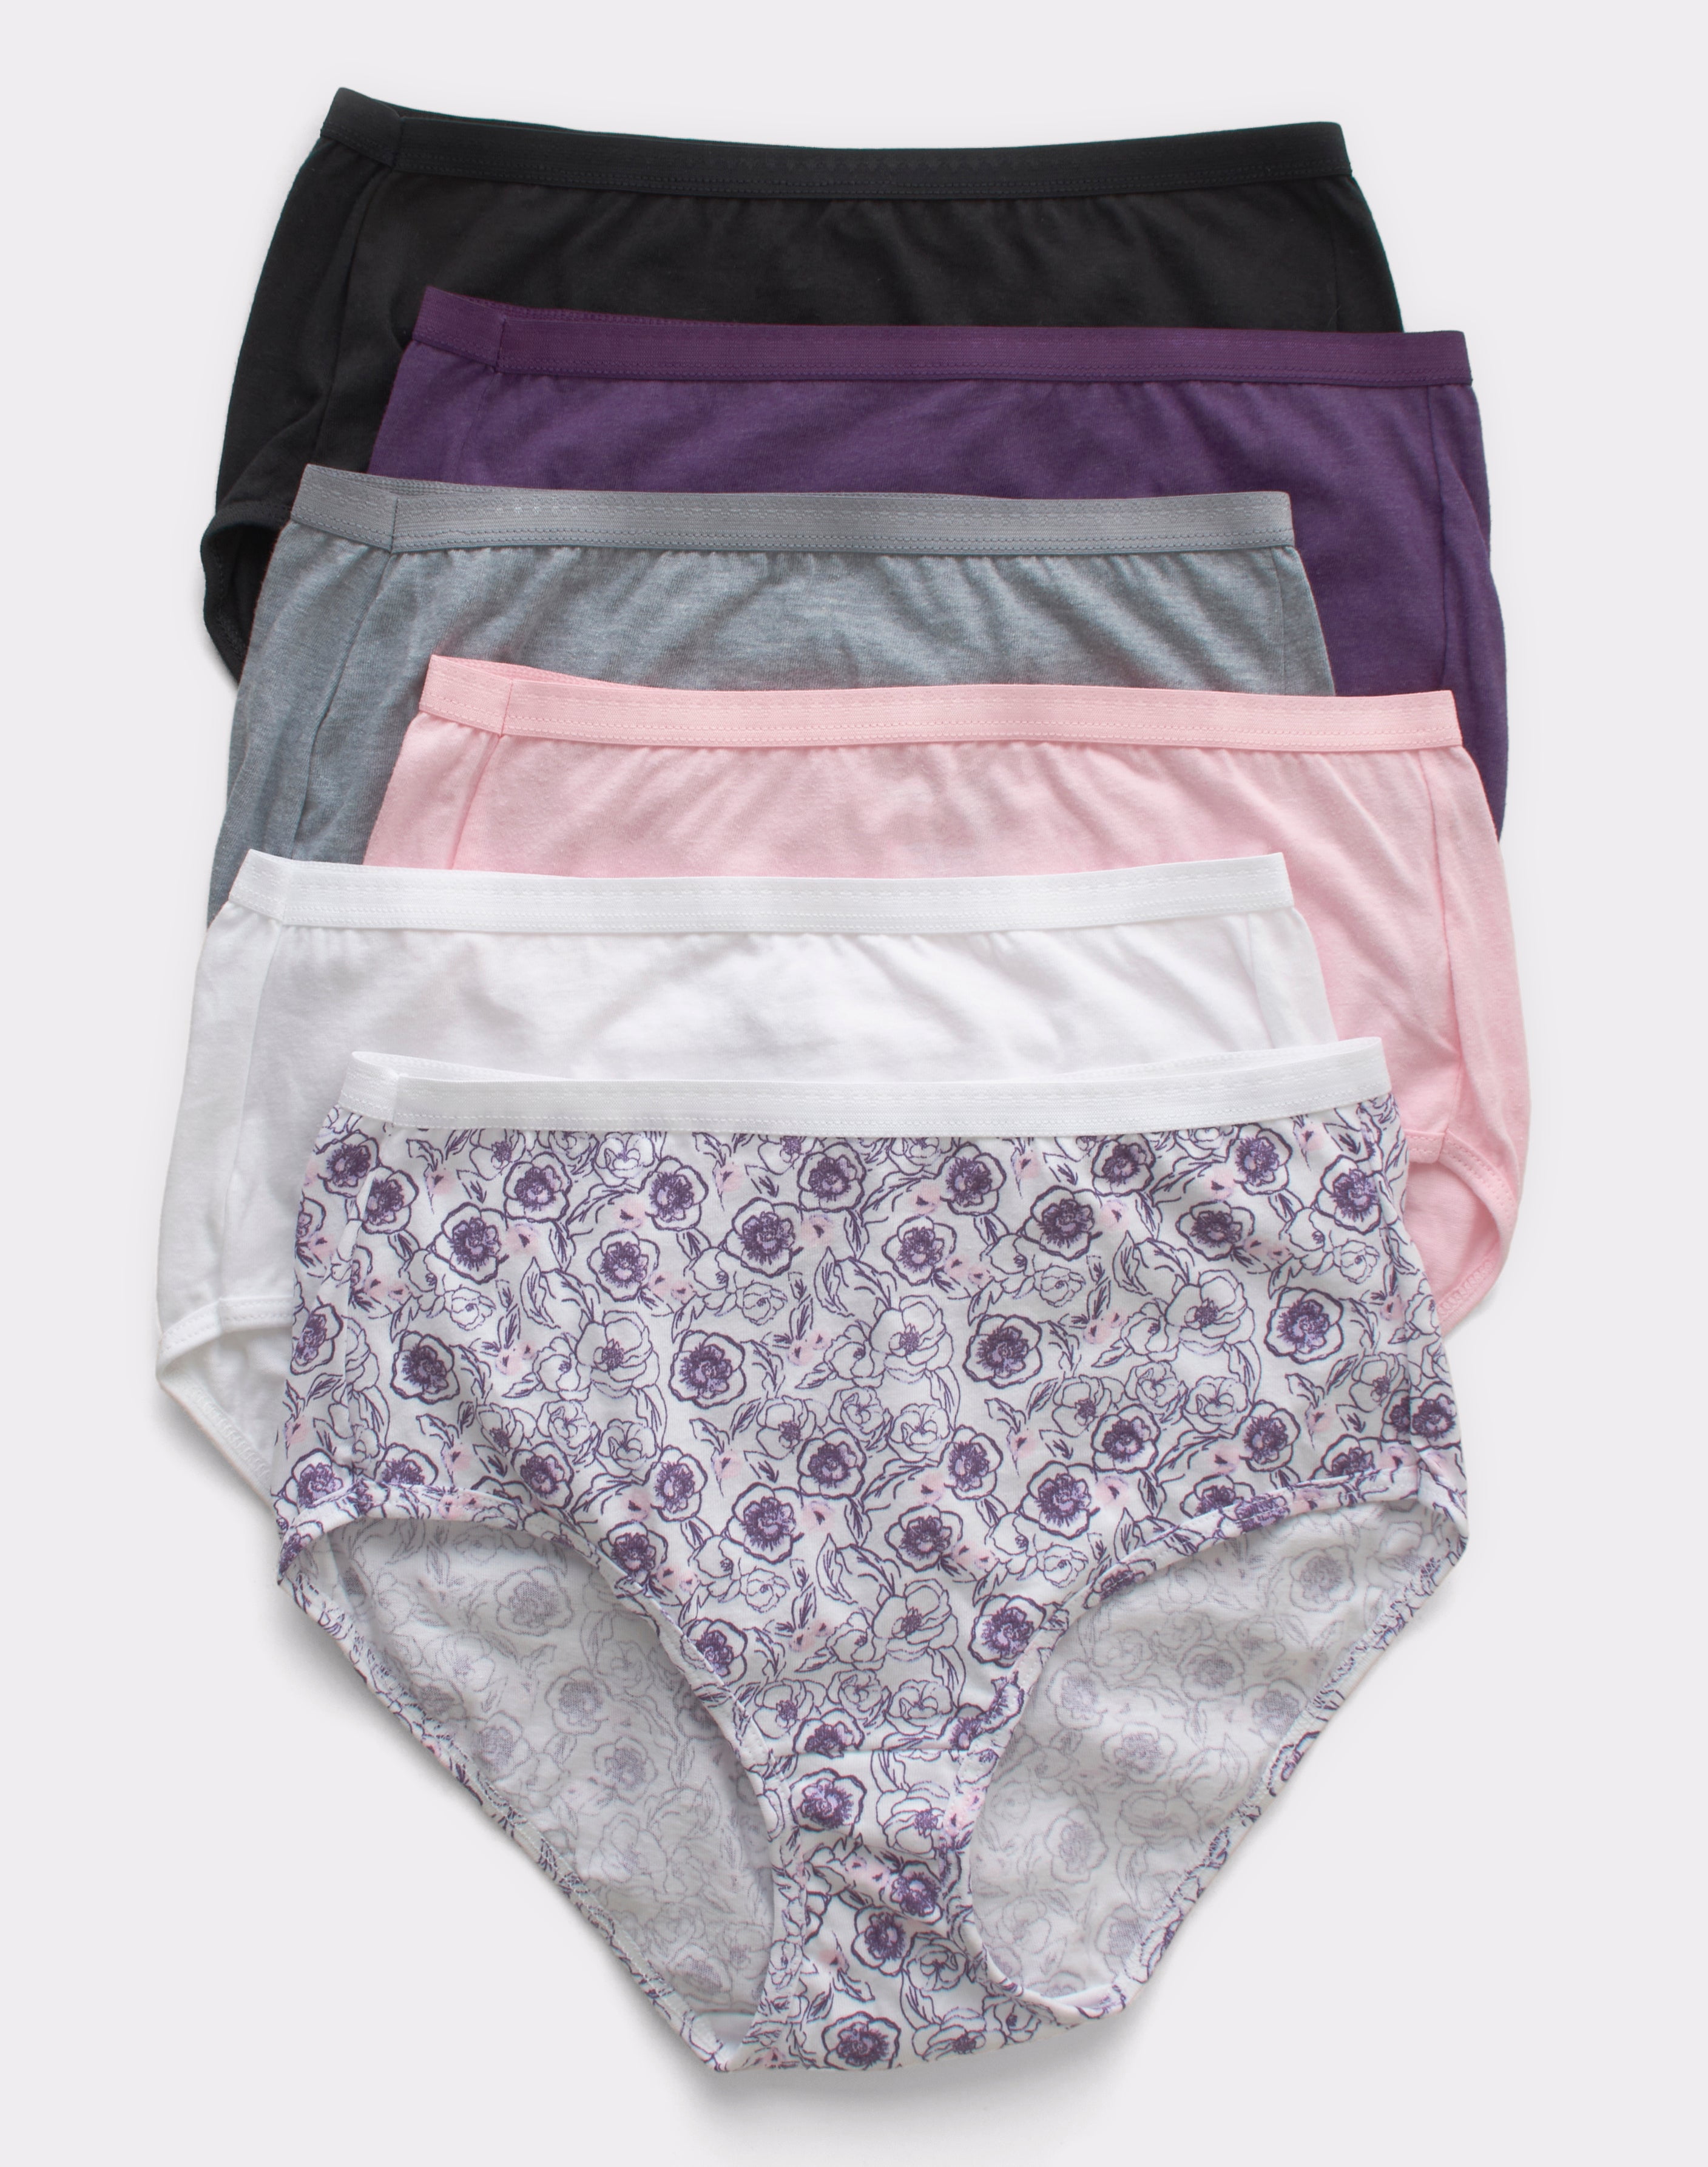 Hanes Ultimate Women's Breathable Brief Underwear, 6-Pack Sugar